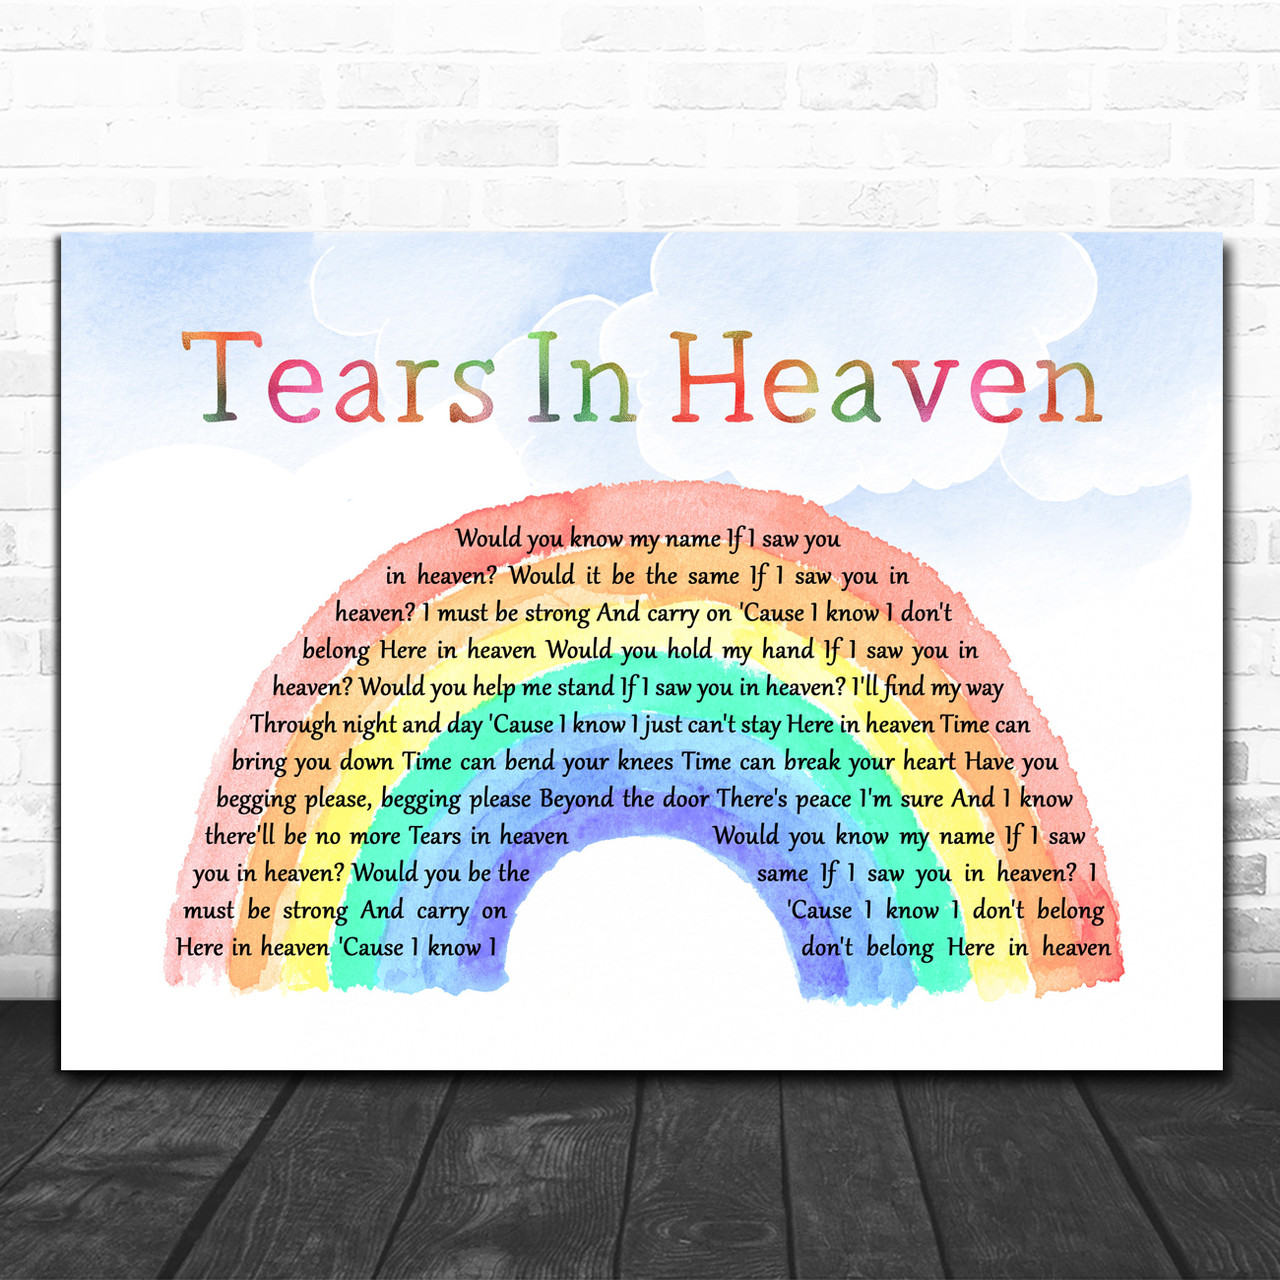 Tears in Heaven (lyrics) by:Eric Clapton 